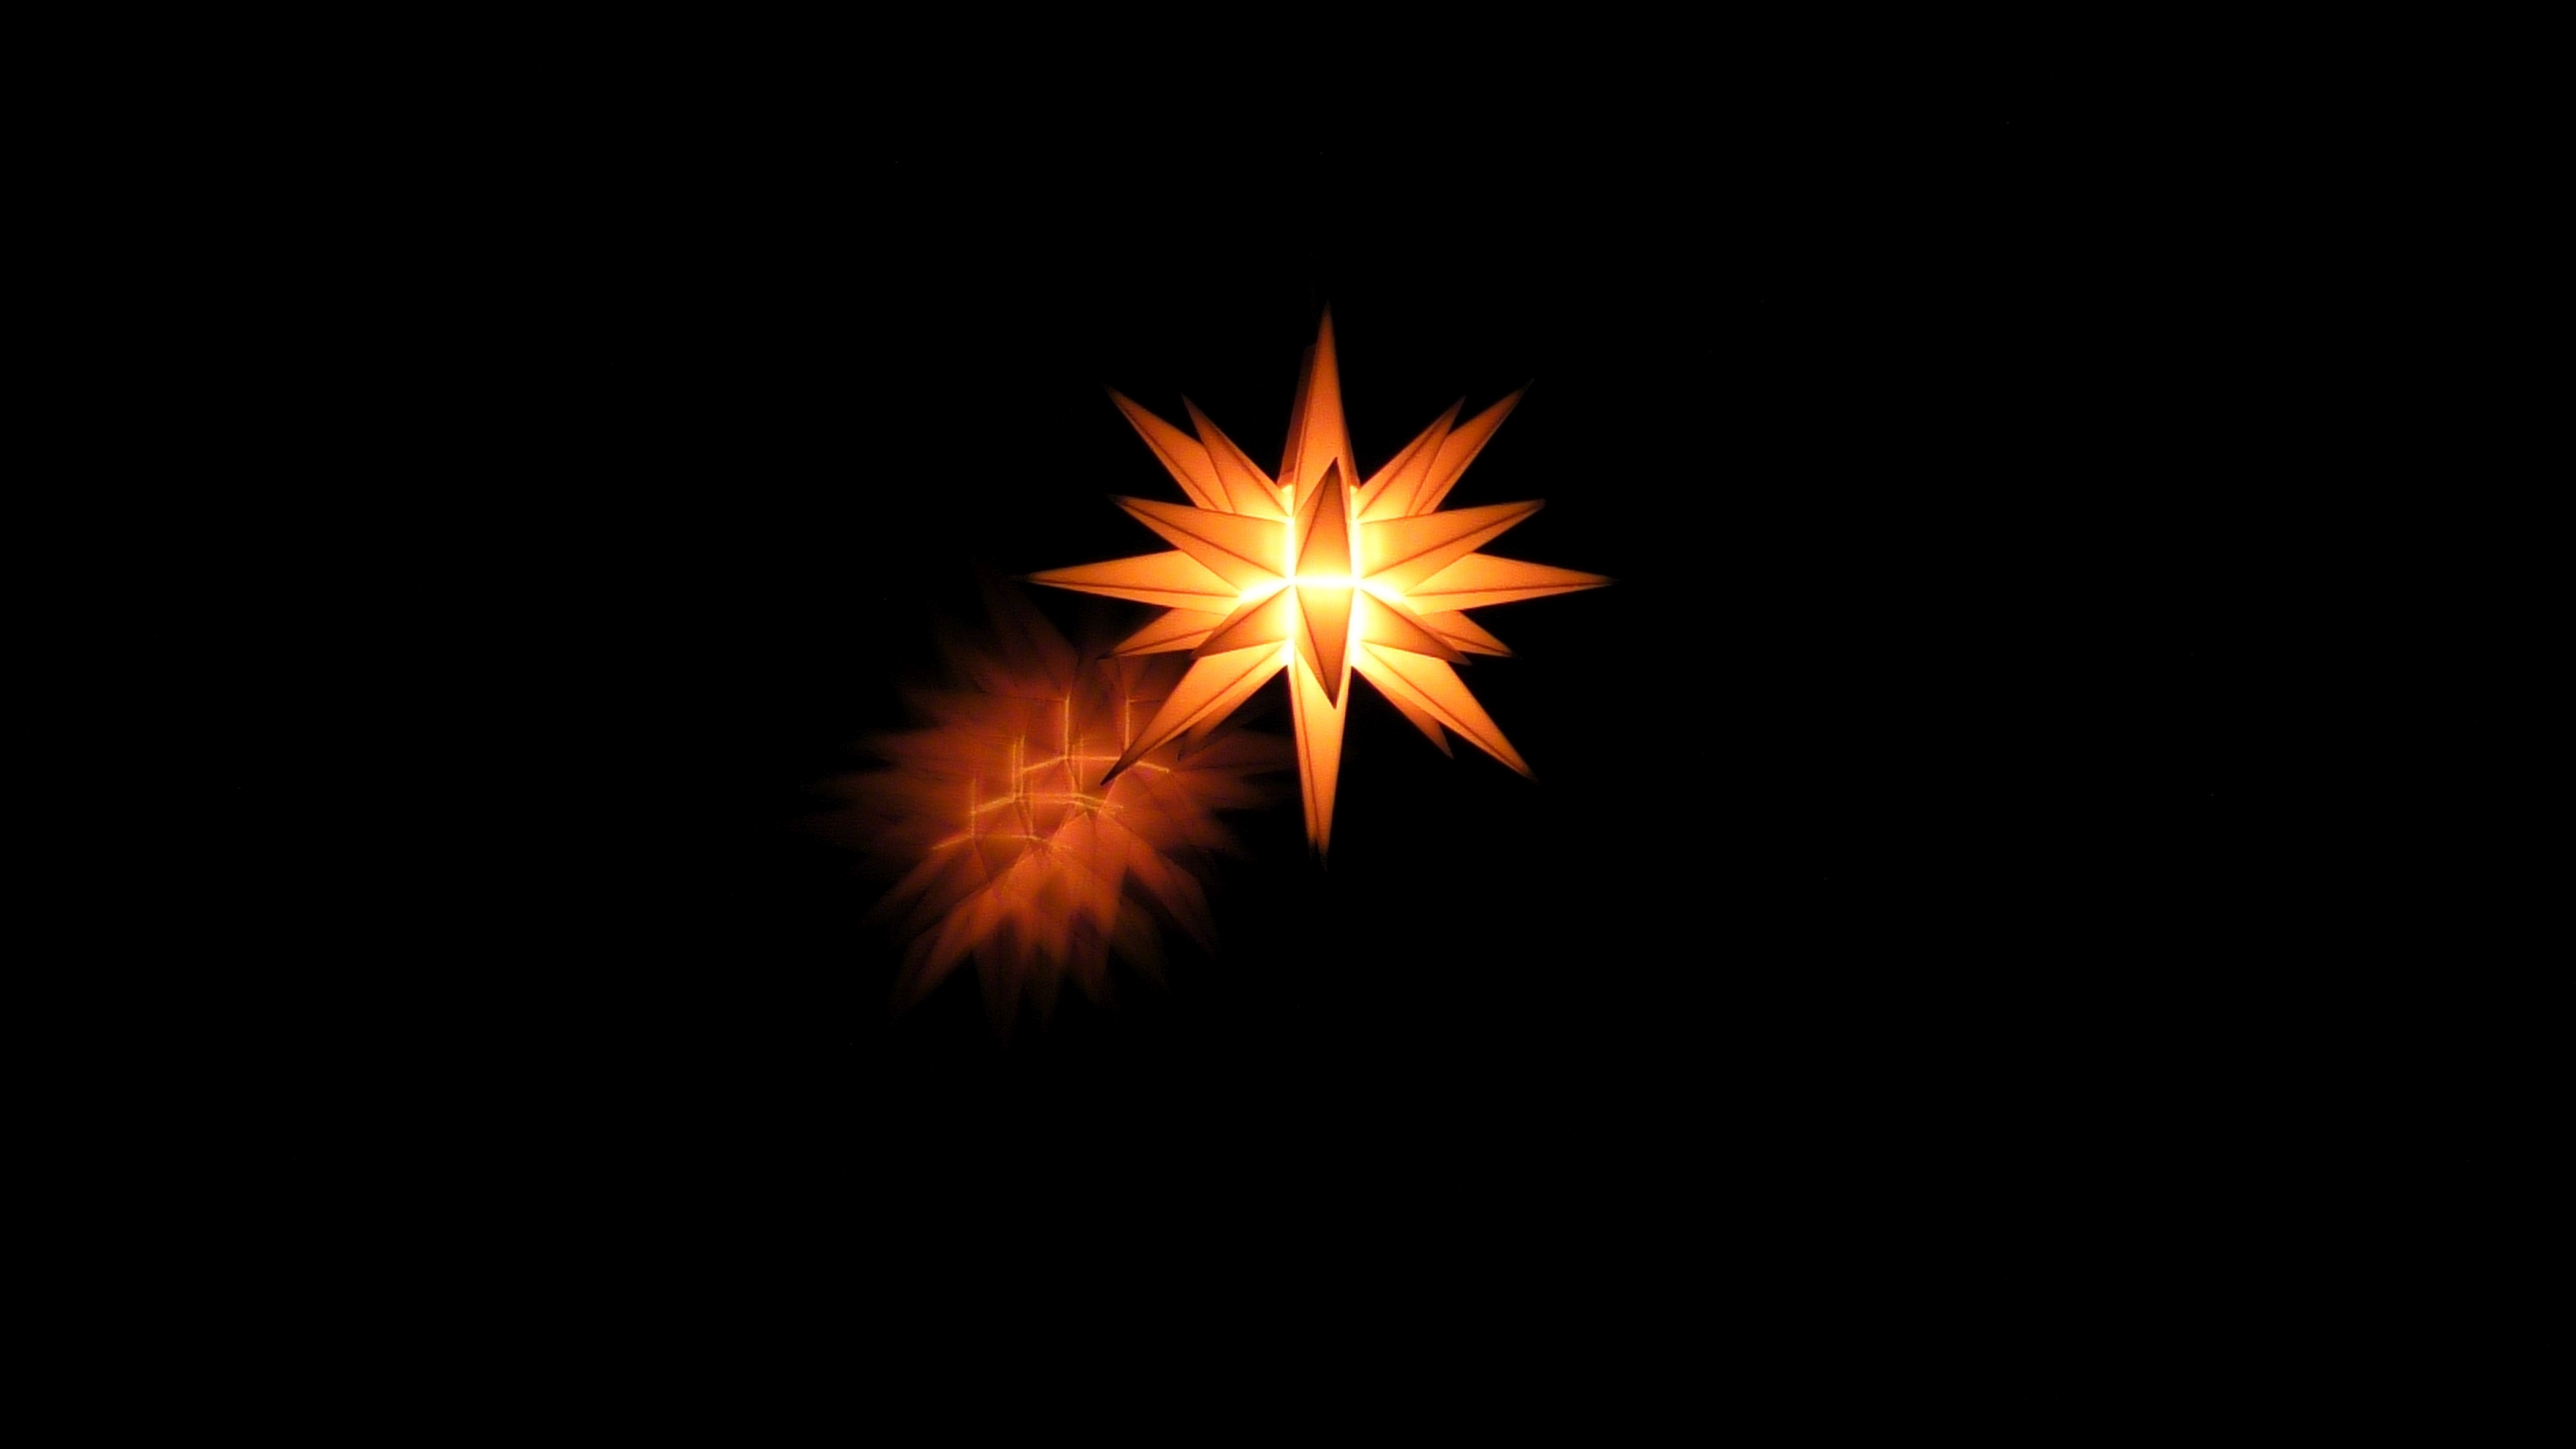 star shape light dark background 4k 1539369906 - star, shape, light, dark background 4k - Star, shape, Light